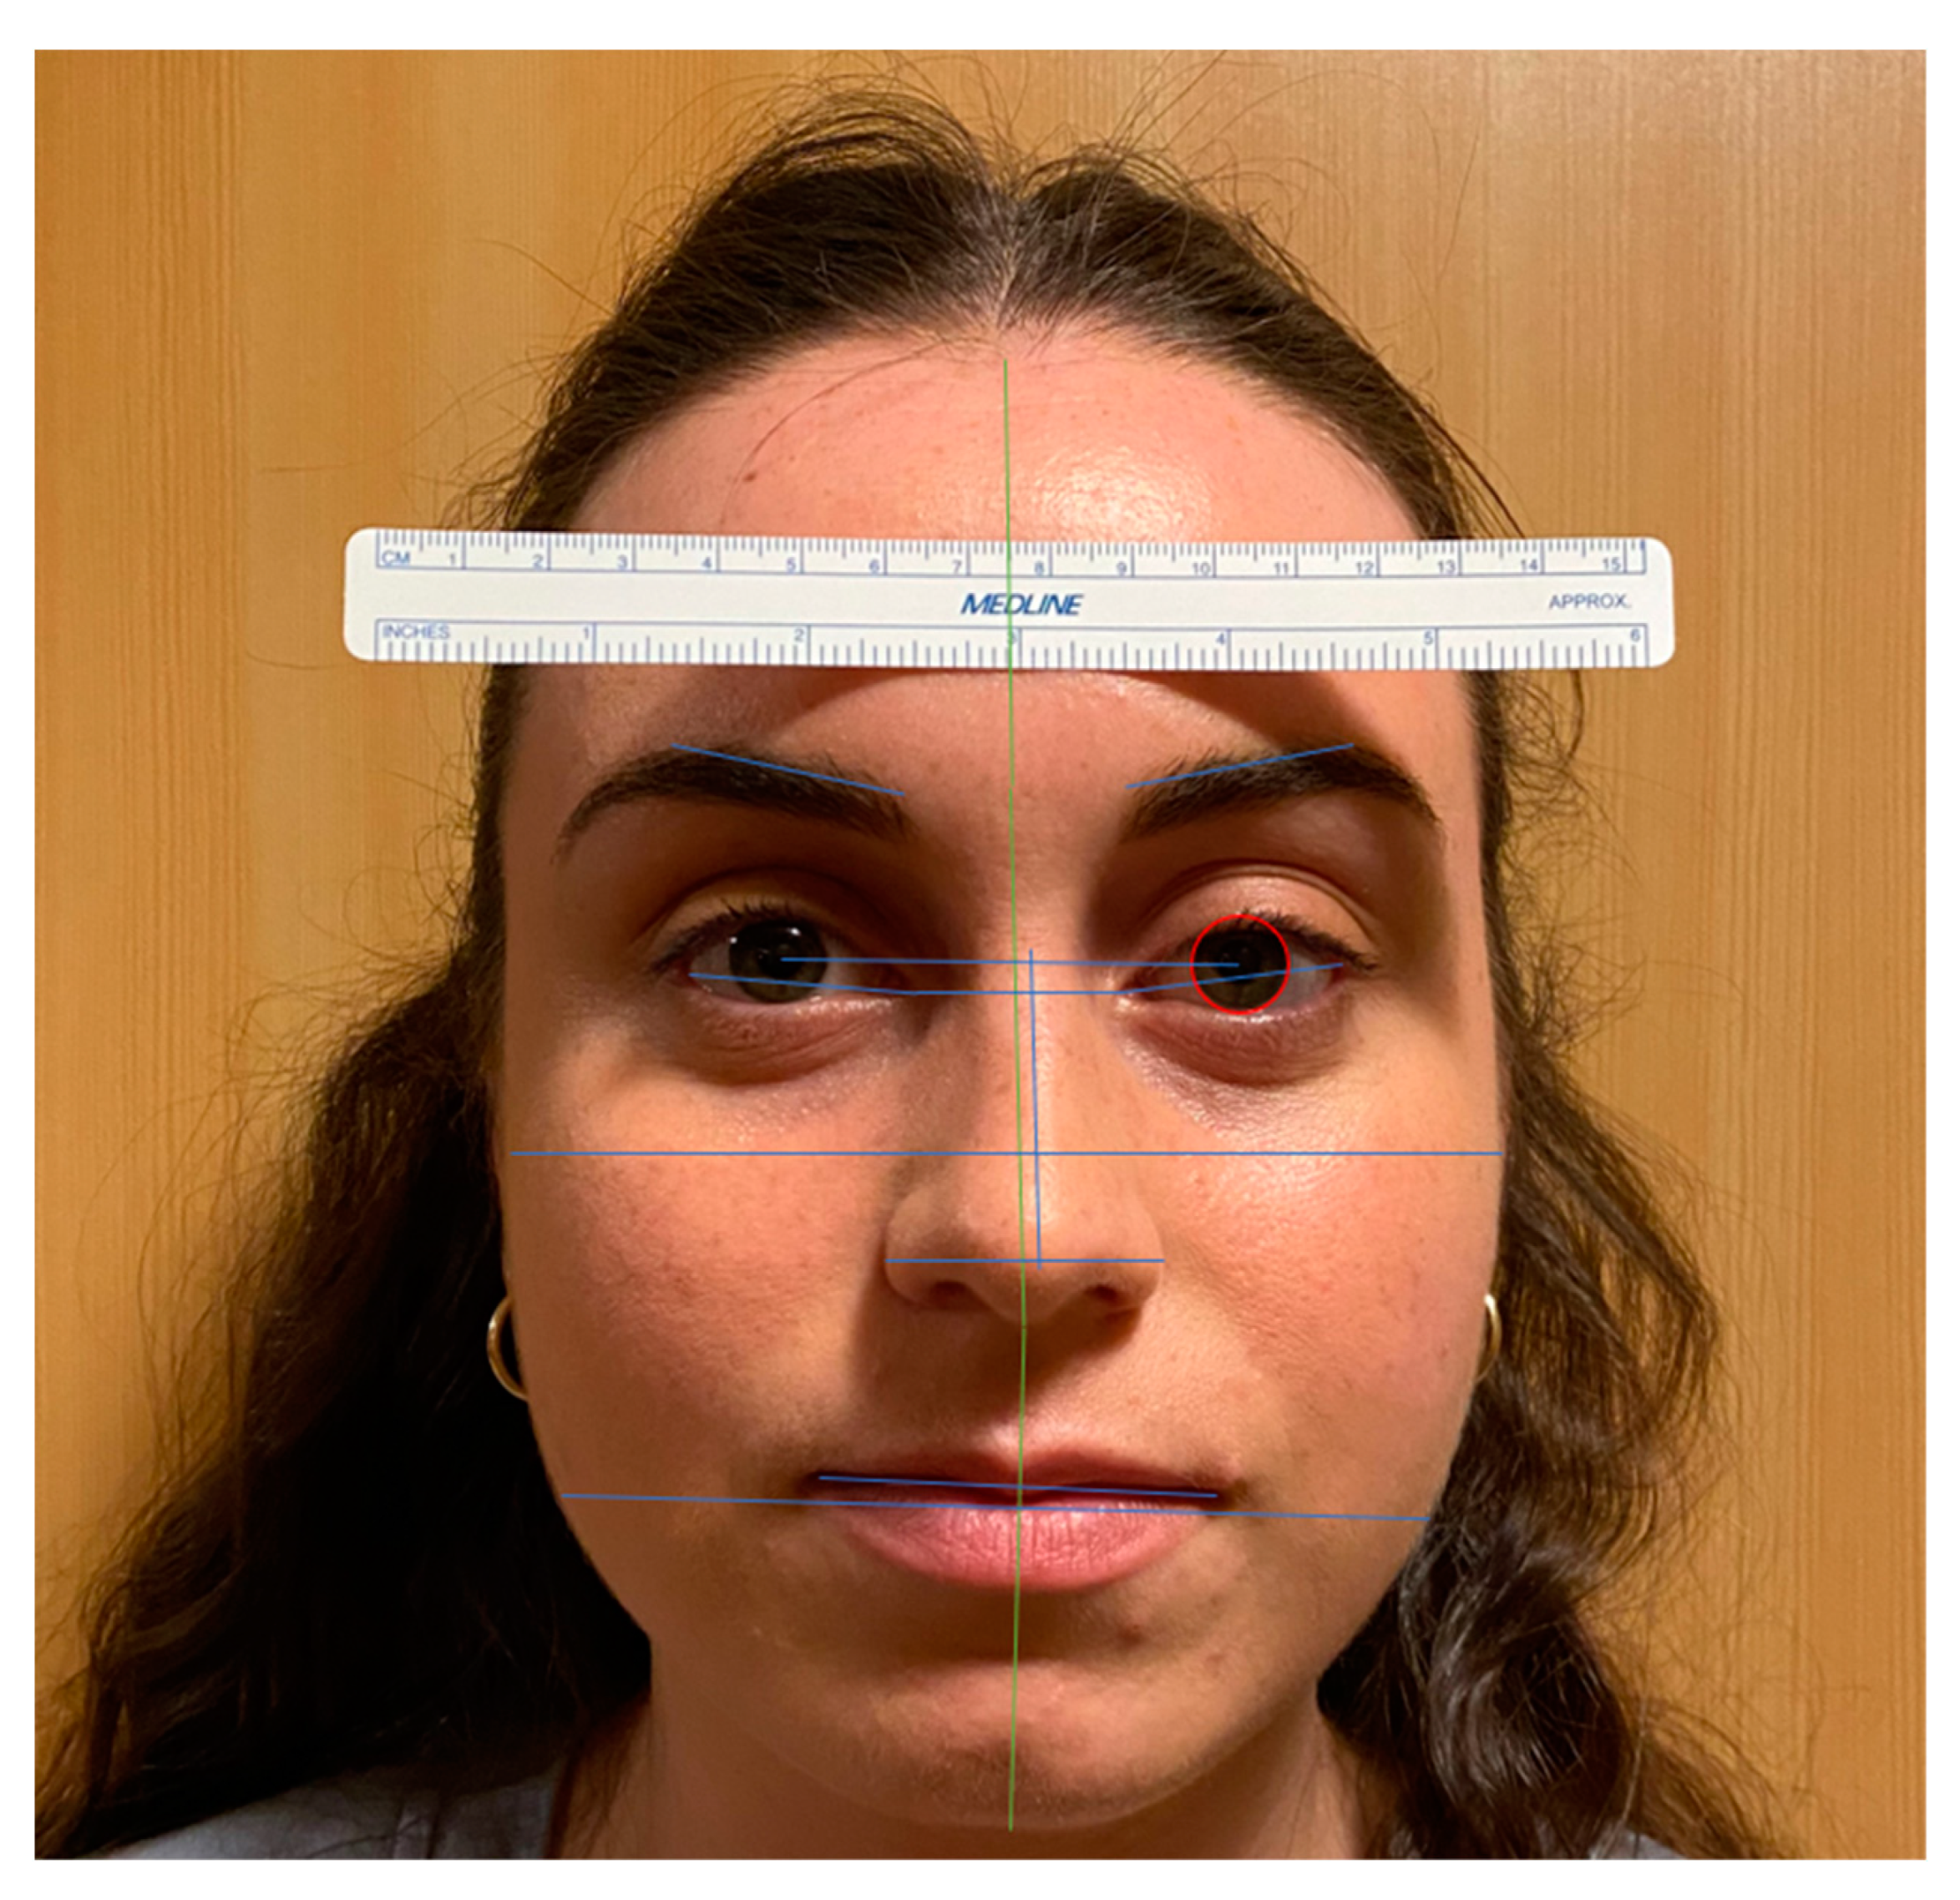 JCM Free Full-Text Facial Morphometrics in Black Celebrities Contemporary Facial Analysis Using an Artificial Intelligence Platform